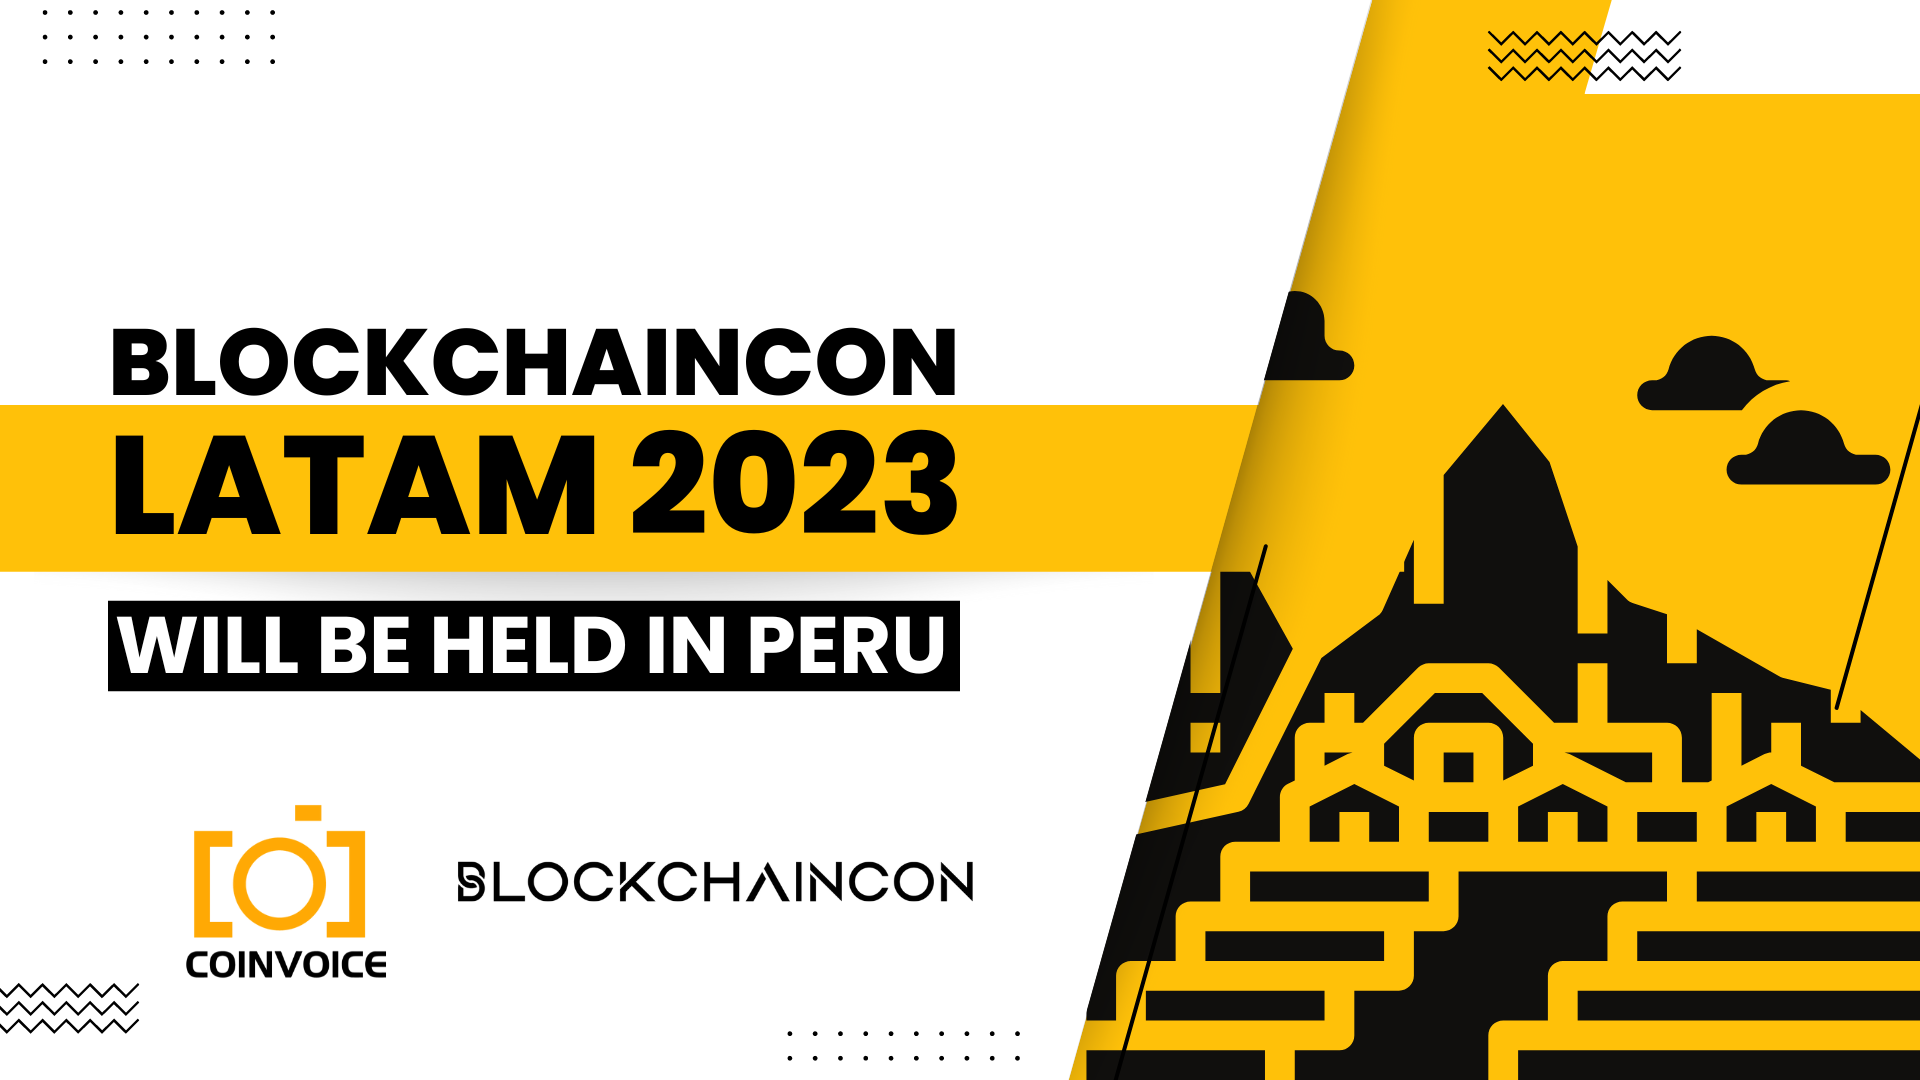 Blockchaincon Latam 2023 will be held in Peru